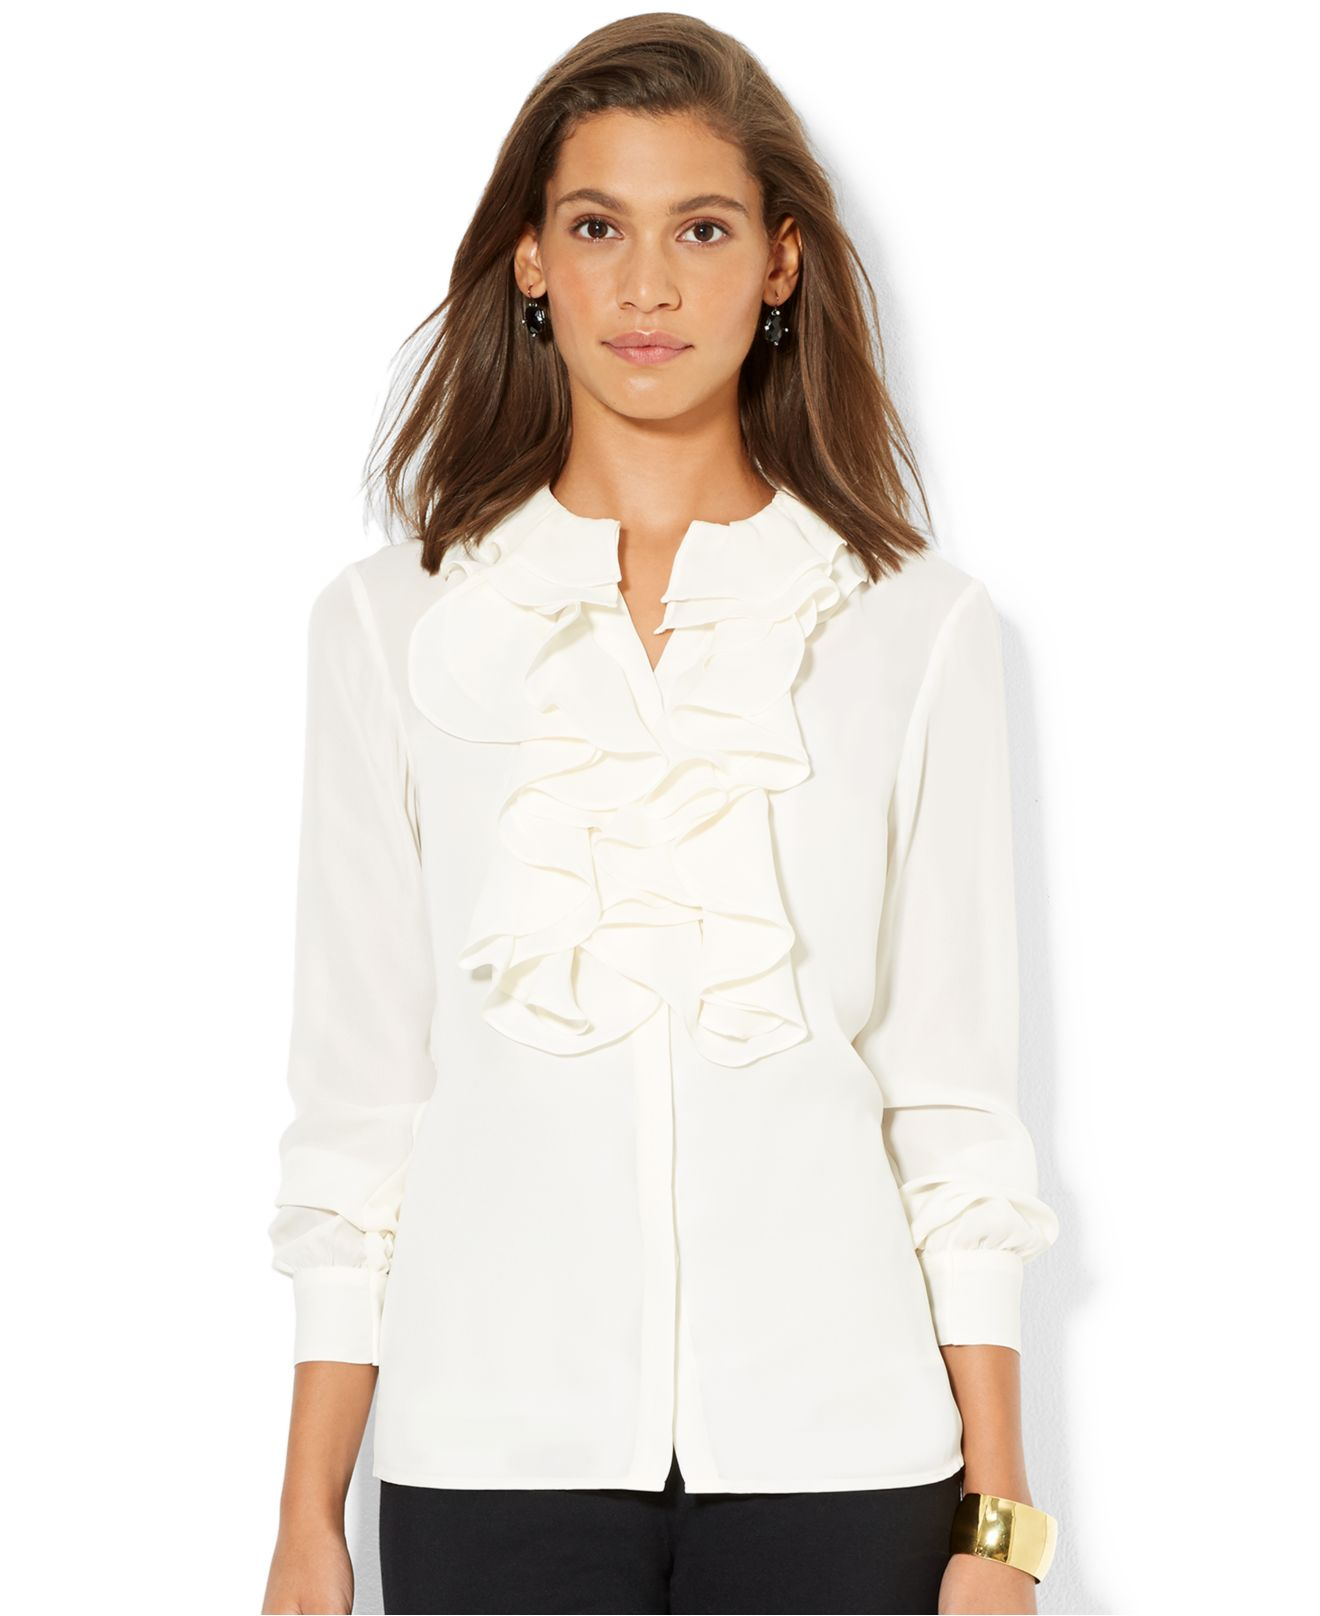 Lyst - Lauren By Ralph Lauren Long-sleeve Ruffled Blouse in White